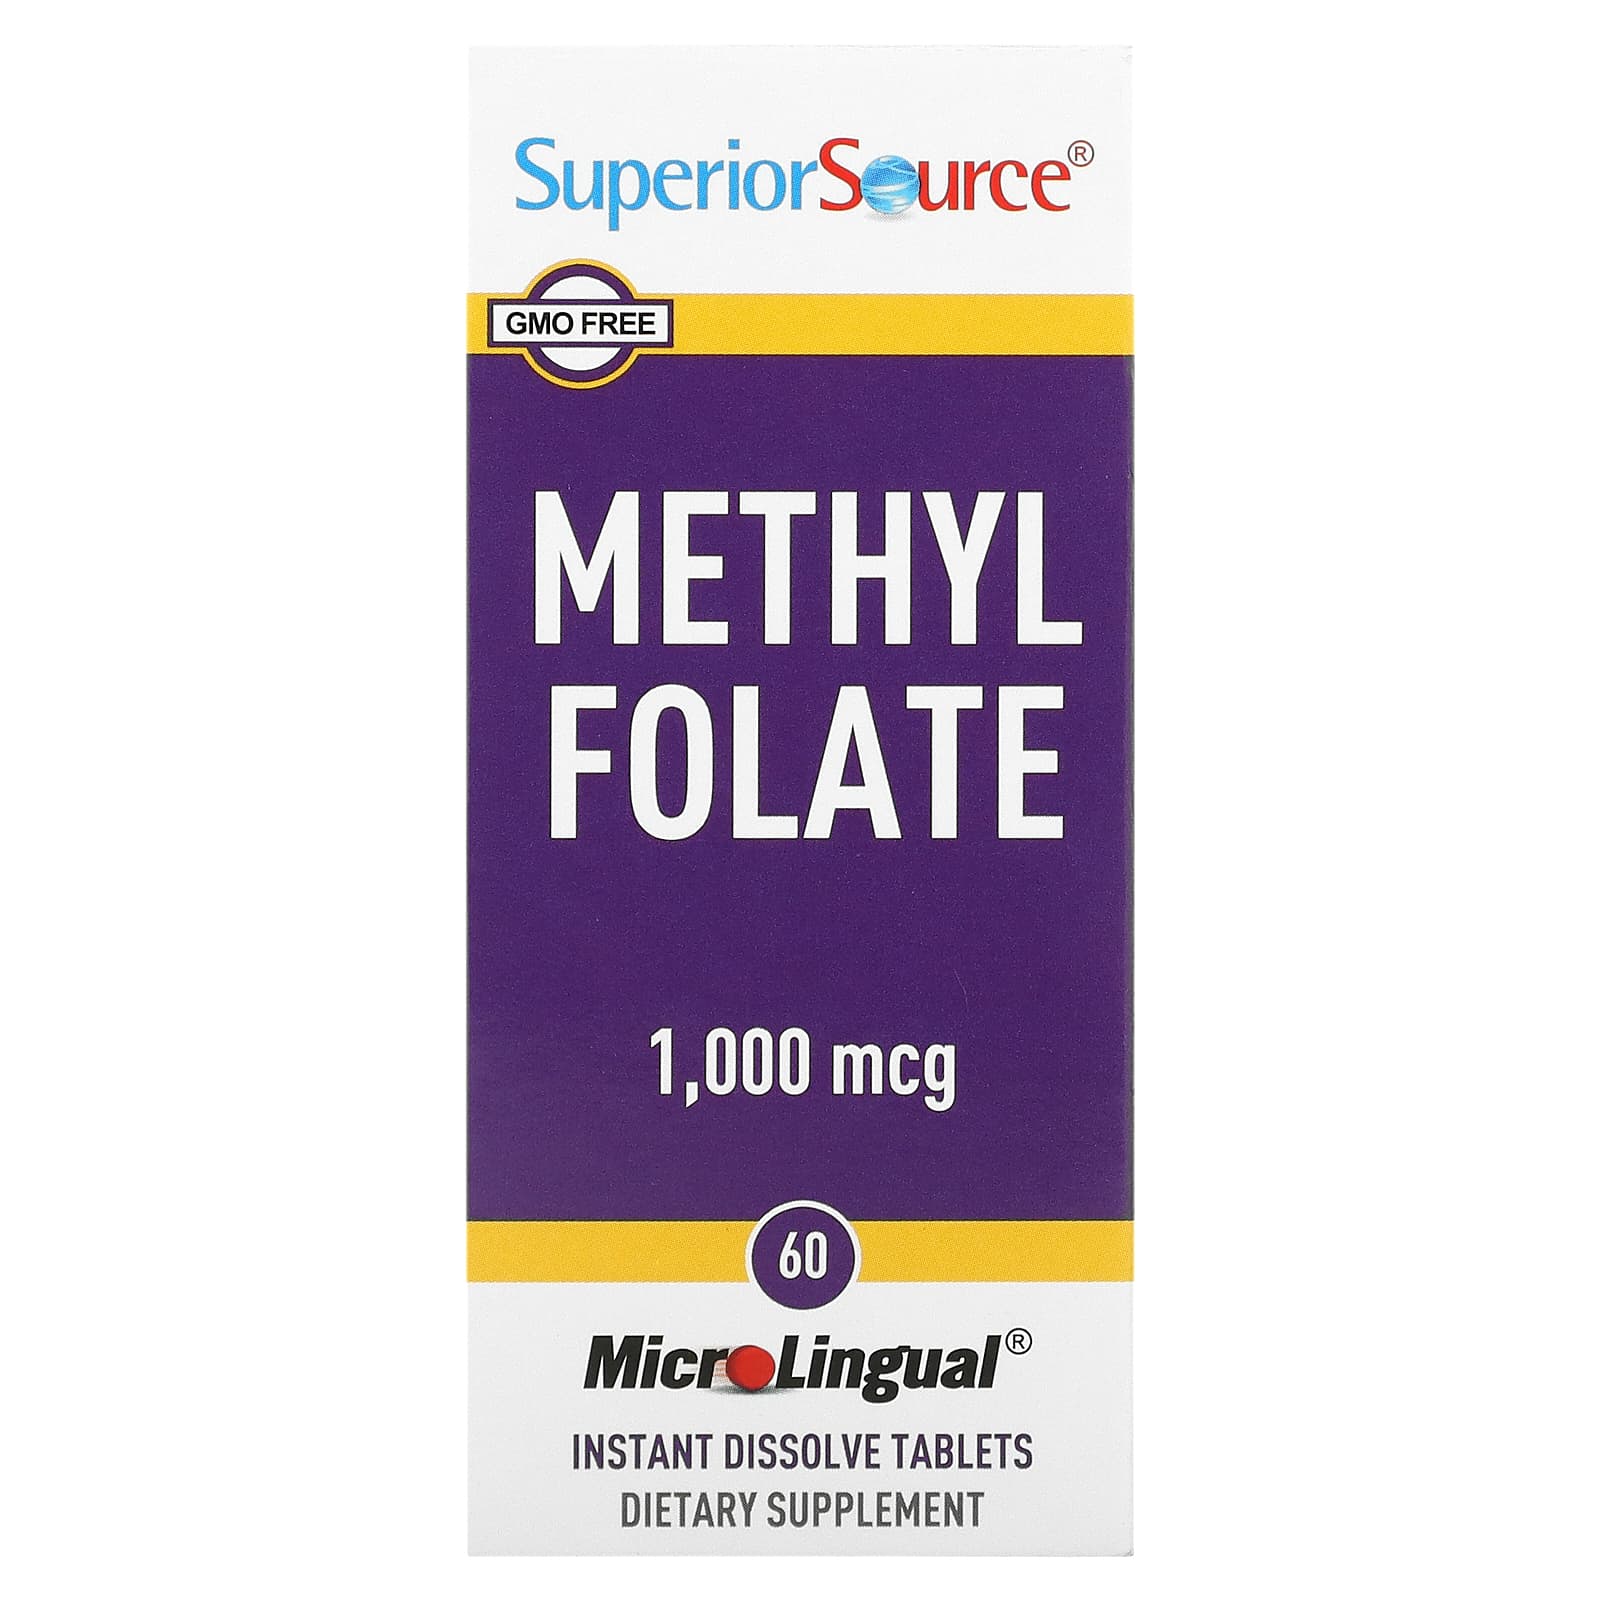 Superior Source Метилфолат 1000 мкг 60 быстрорассасывающихся компактных таблеток MicroLingual